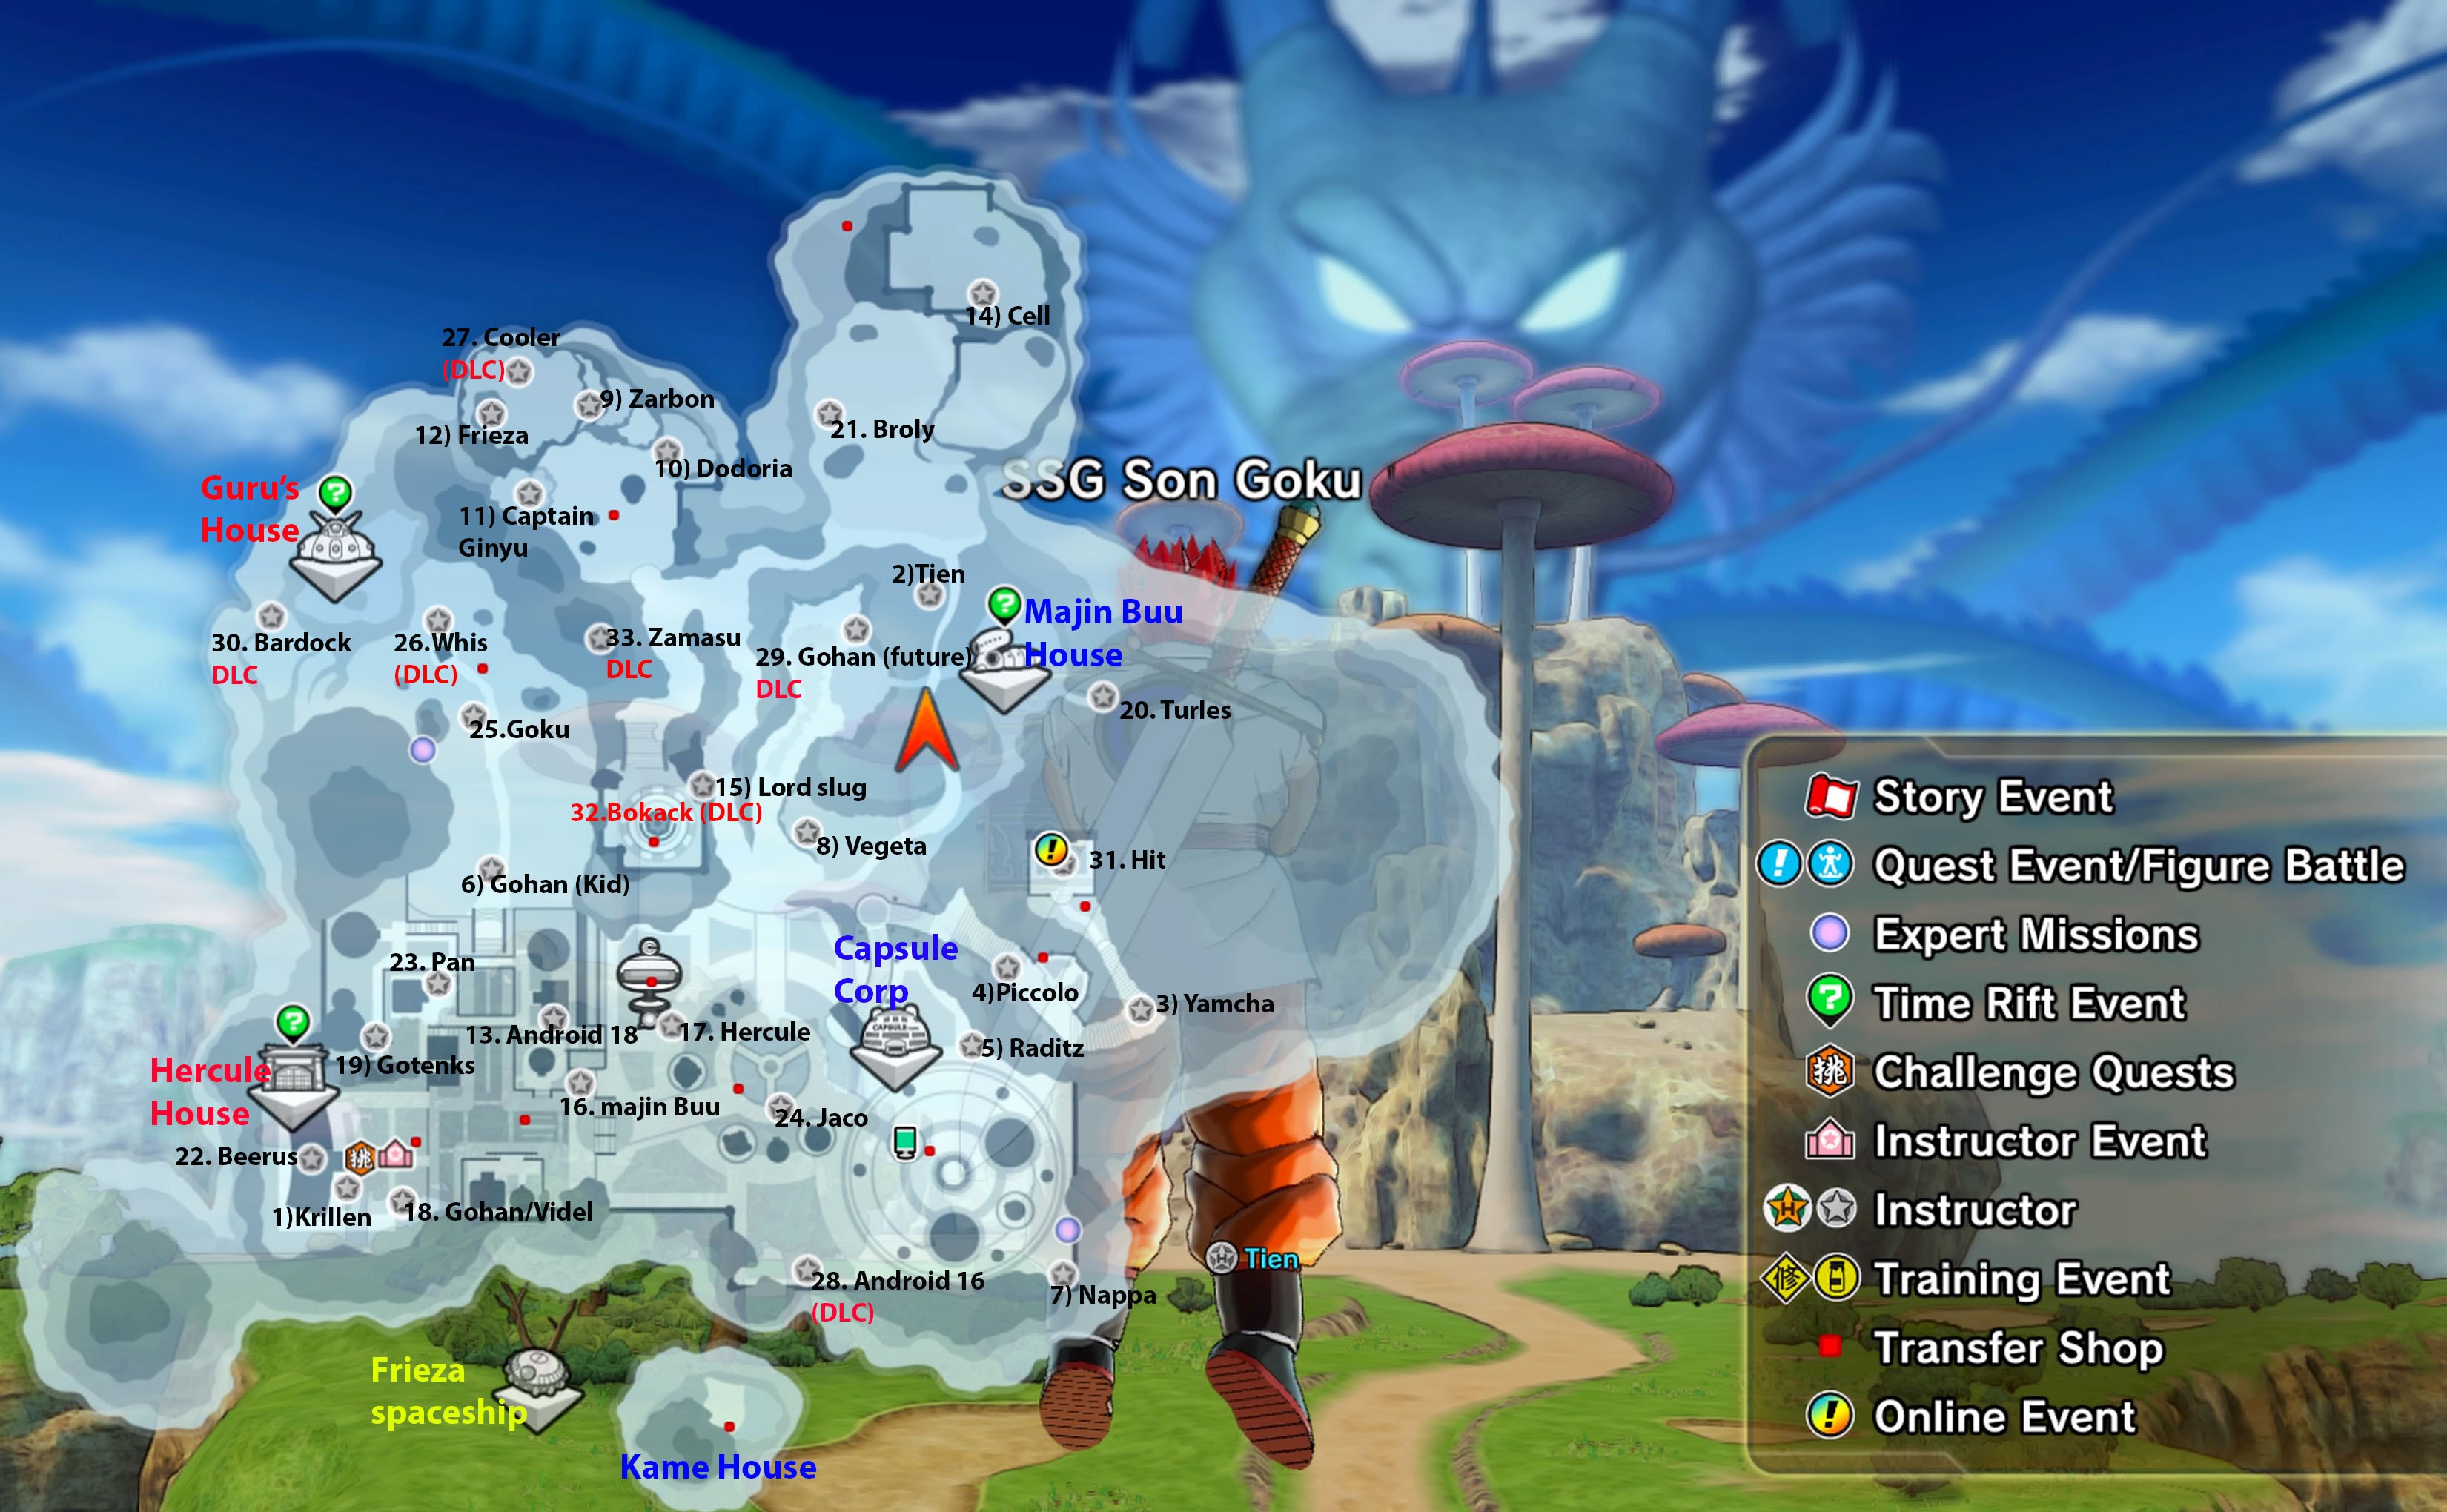 Dragon Ball Xenoverse: Dragon Ball locations and wish guide